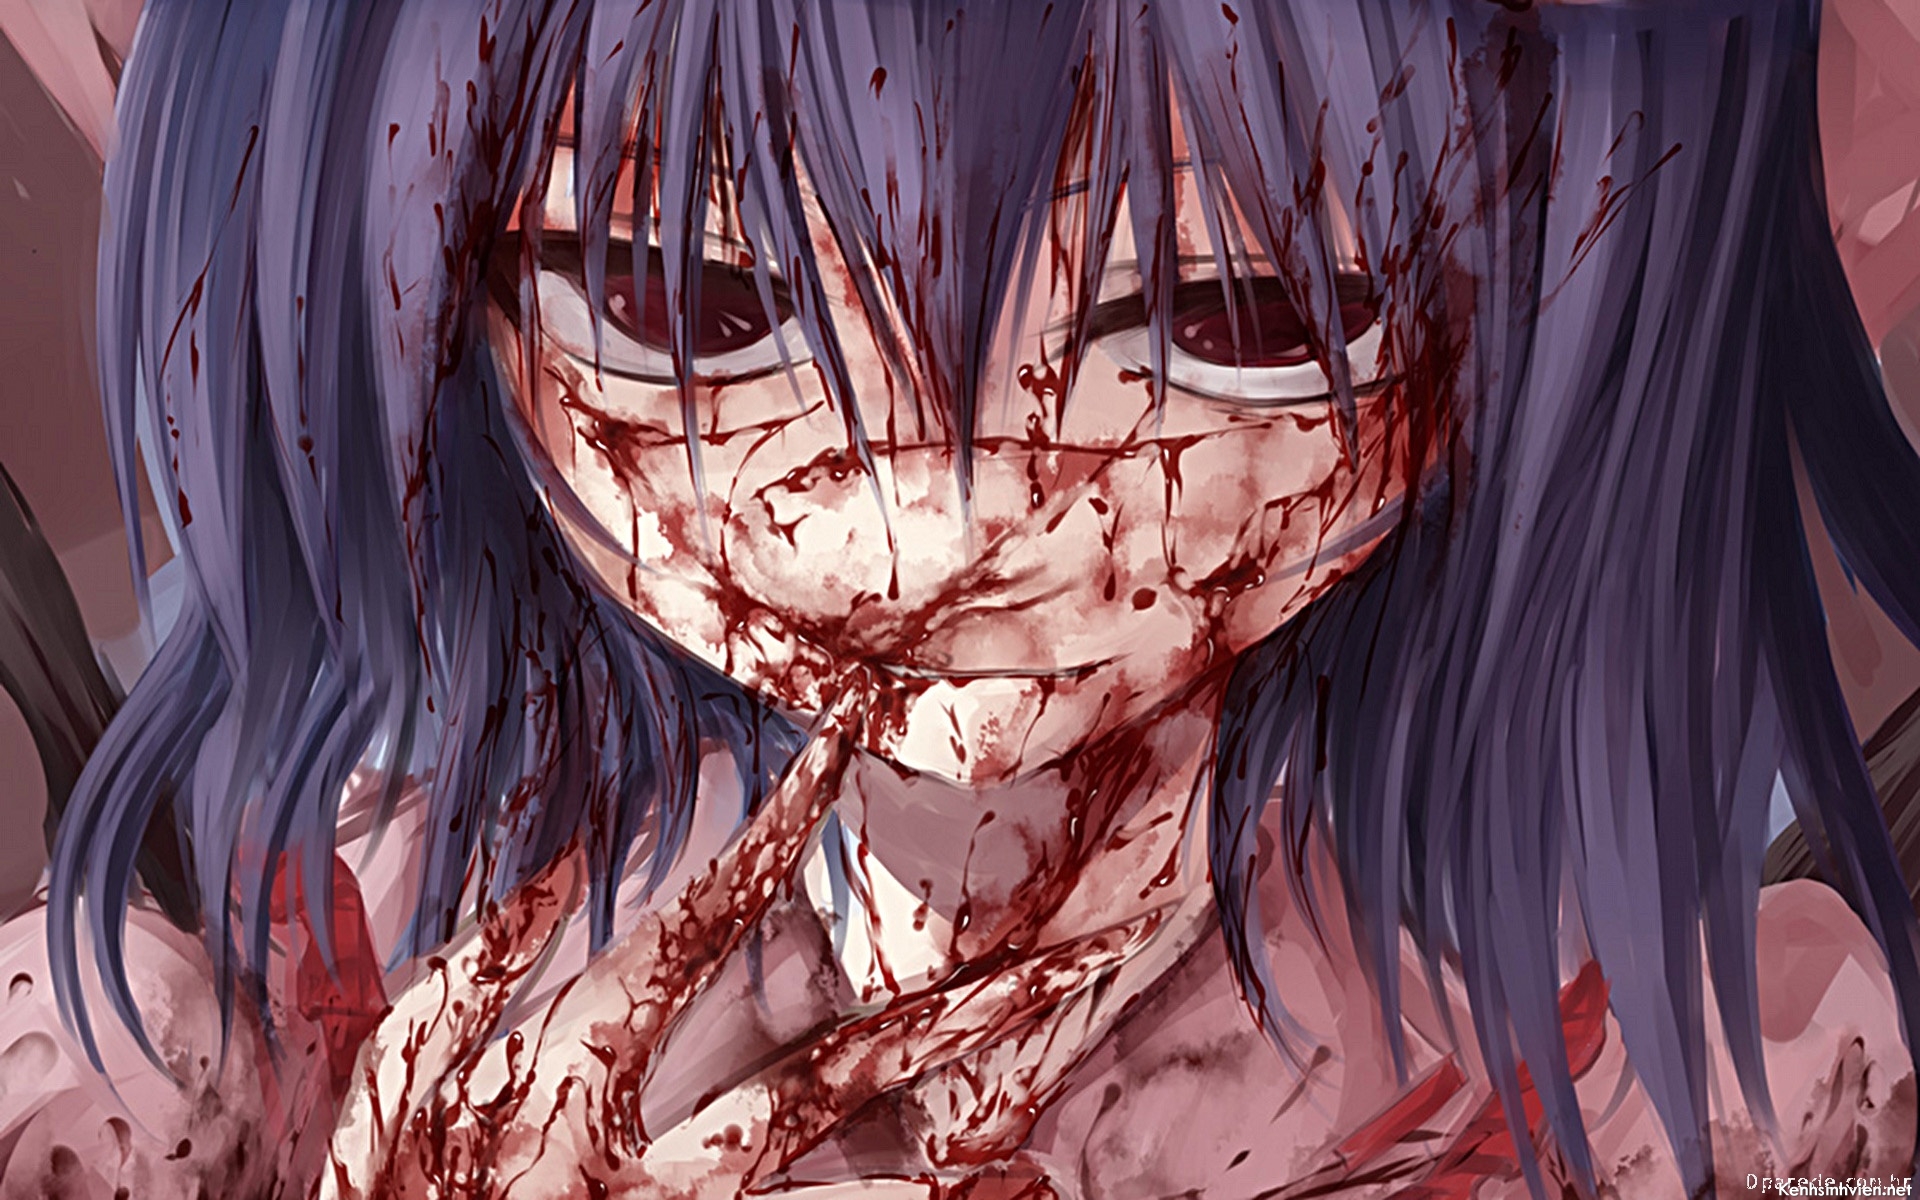 KenhSinhVien-6656-1-other-anime-hd-wallpapers-horror-creepy-blood-1920x1200.jpg